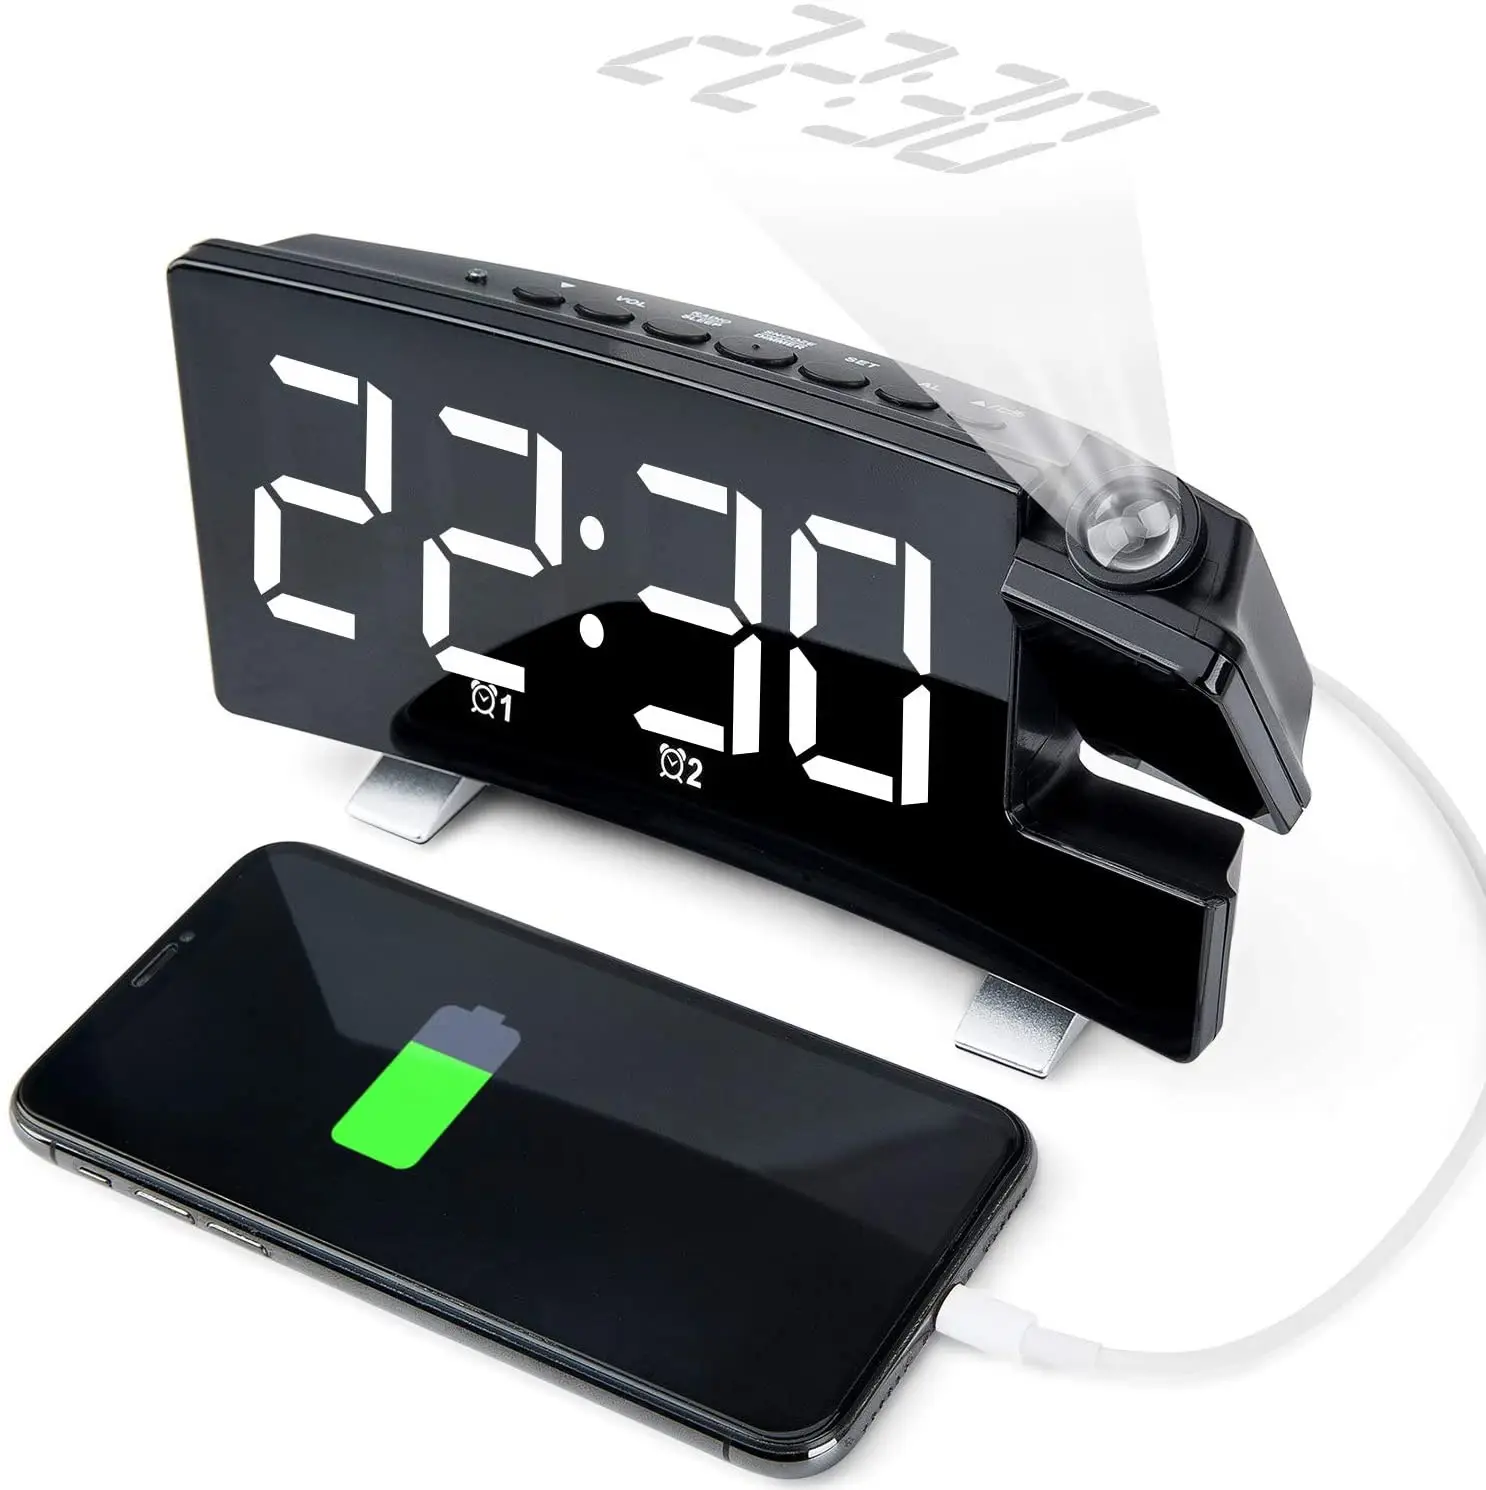 2020 Gift Item Illuminating Alarm Clocks with USB Phone Charger Electronic Smart Clock